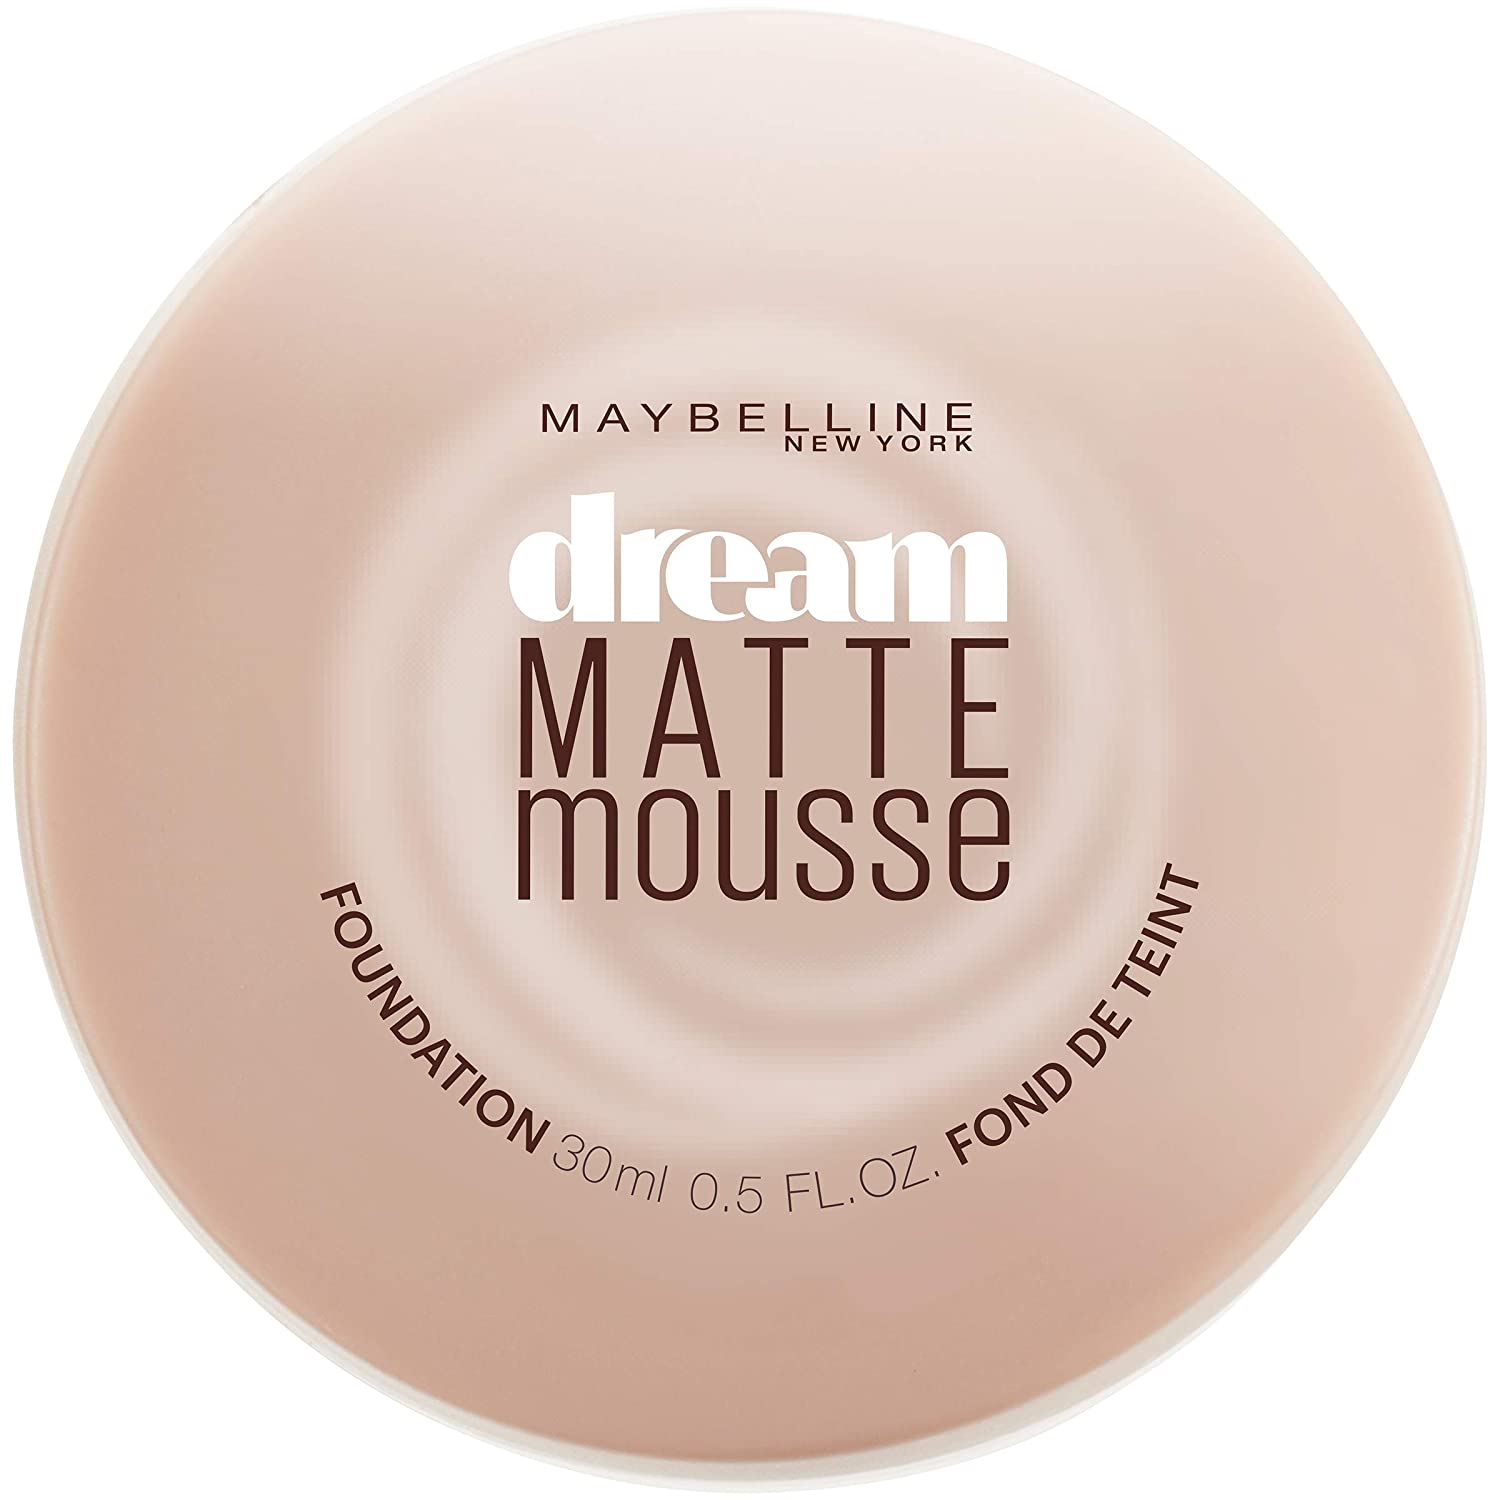 Maybelline Dream Matte Mousse Foundation, Natural Beige, 0.5 fl. oz.(30ml)